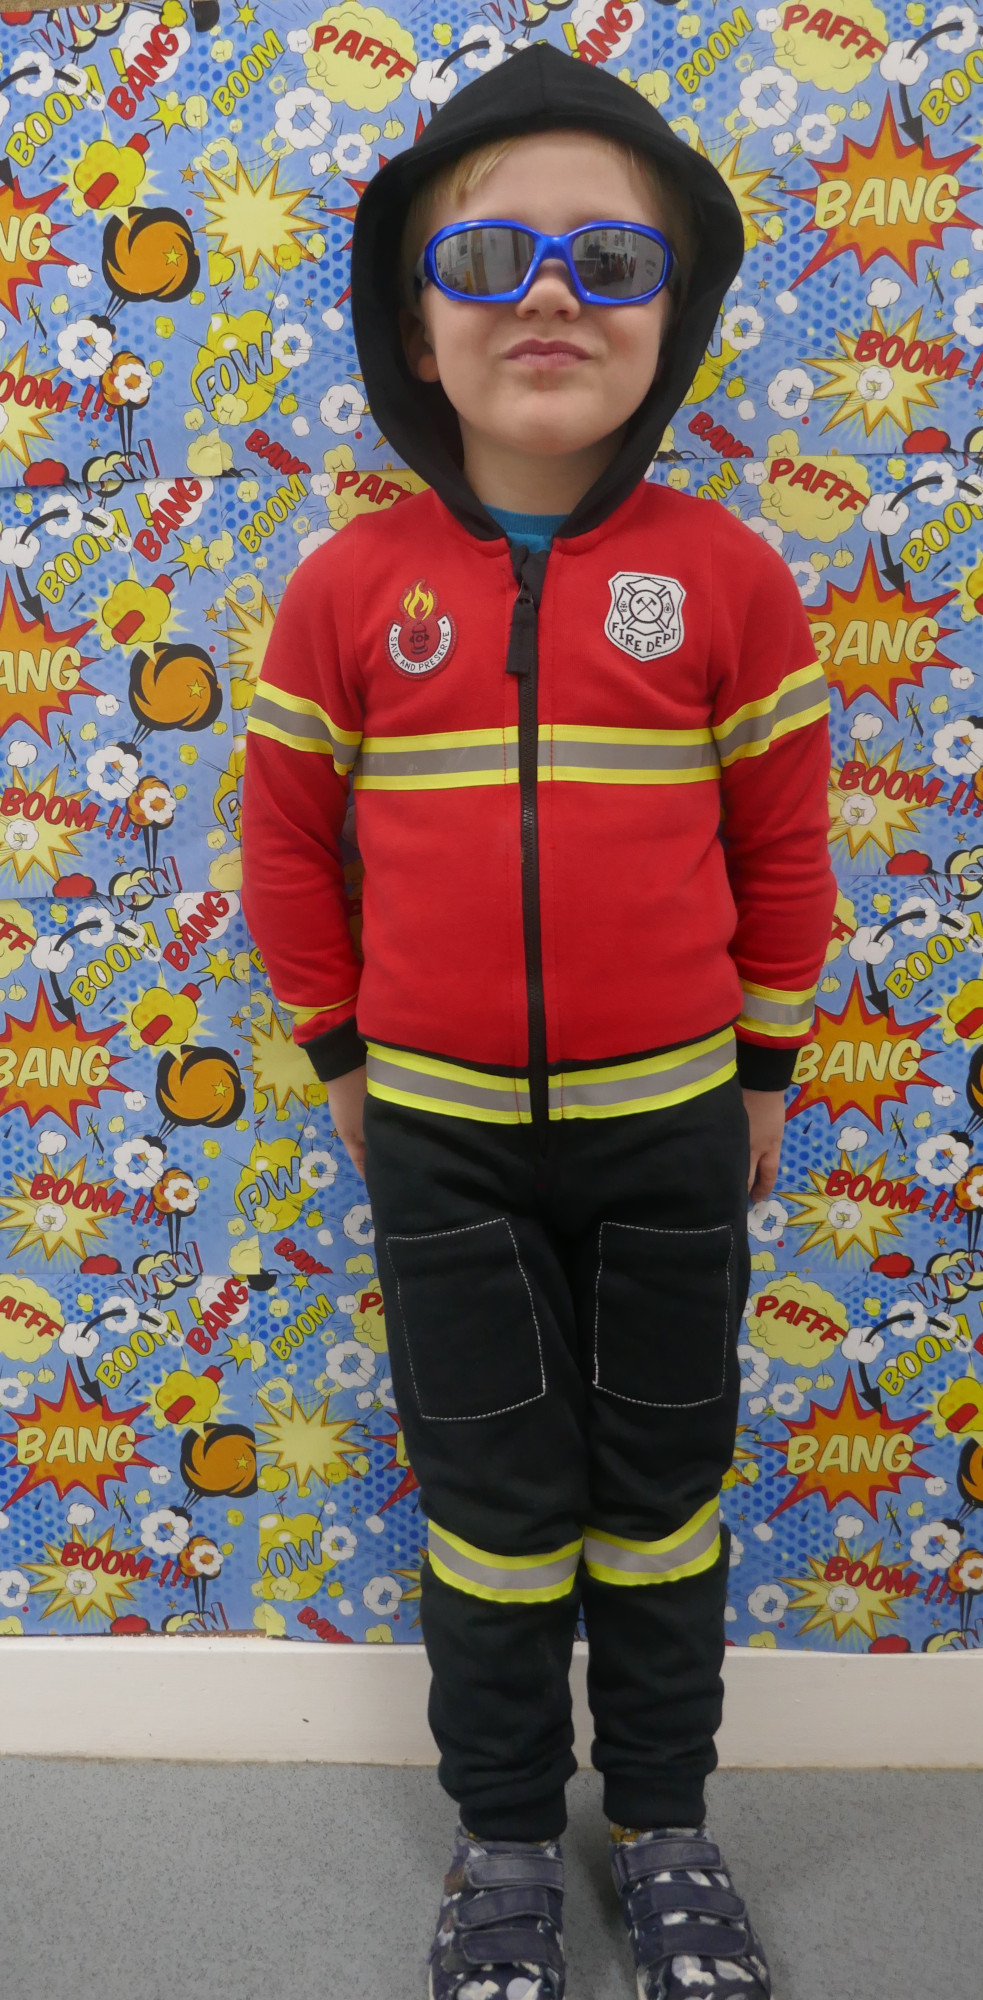 Little boy dressed up as fire man